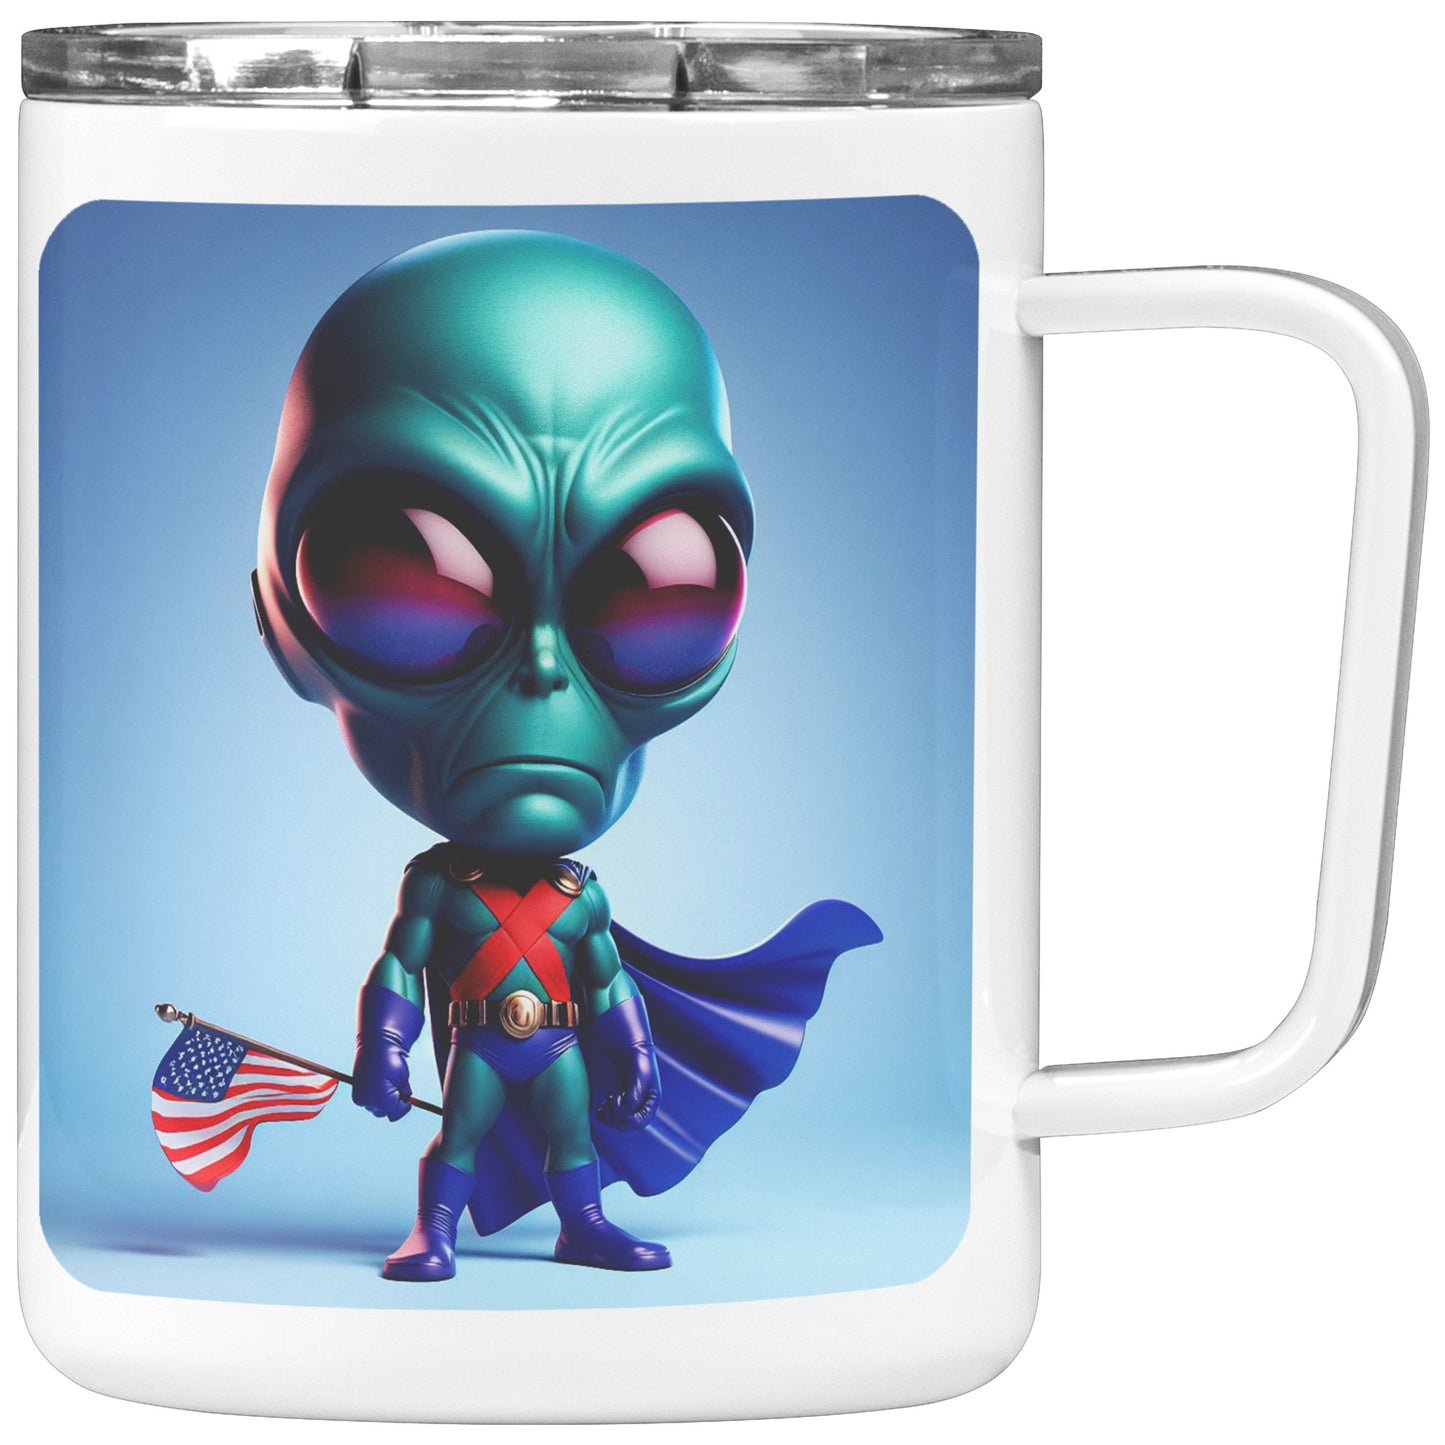 Martian Alien Caricature - Coffee Mug #2